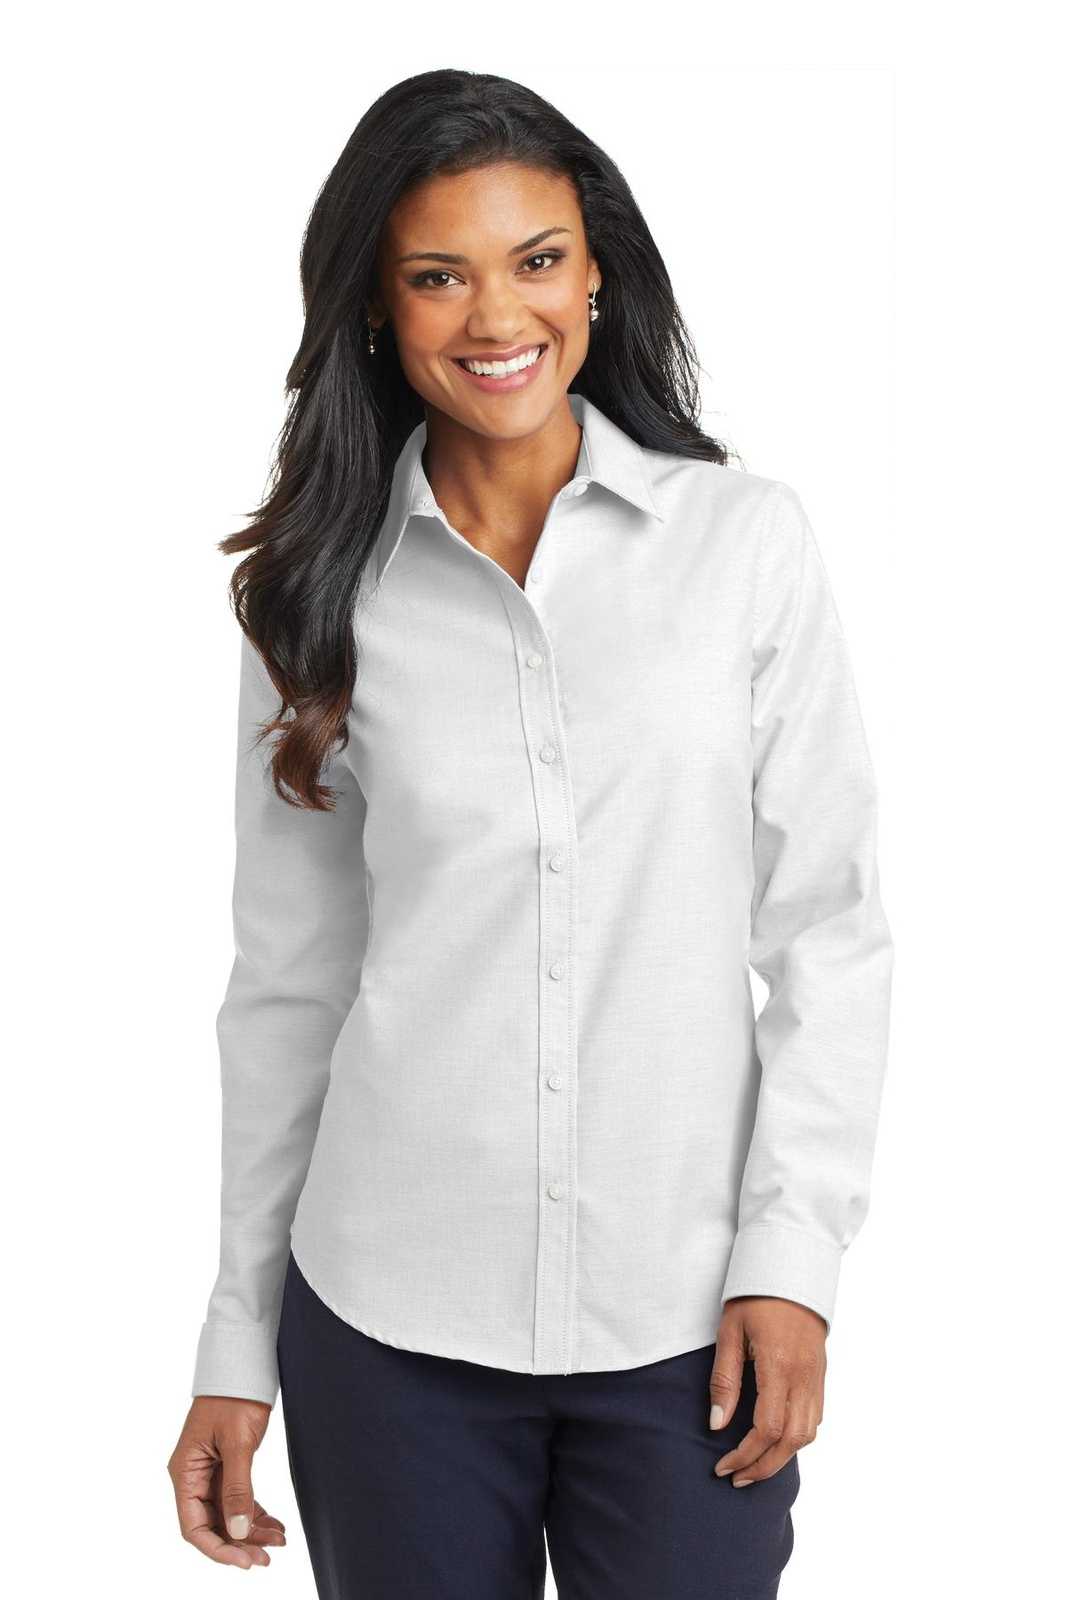 Port Authority L658 Ladies Superpro Oxford Shirt - White - HIT a Double - 1